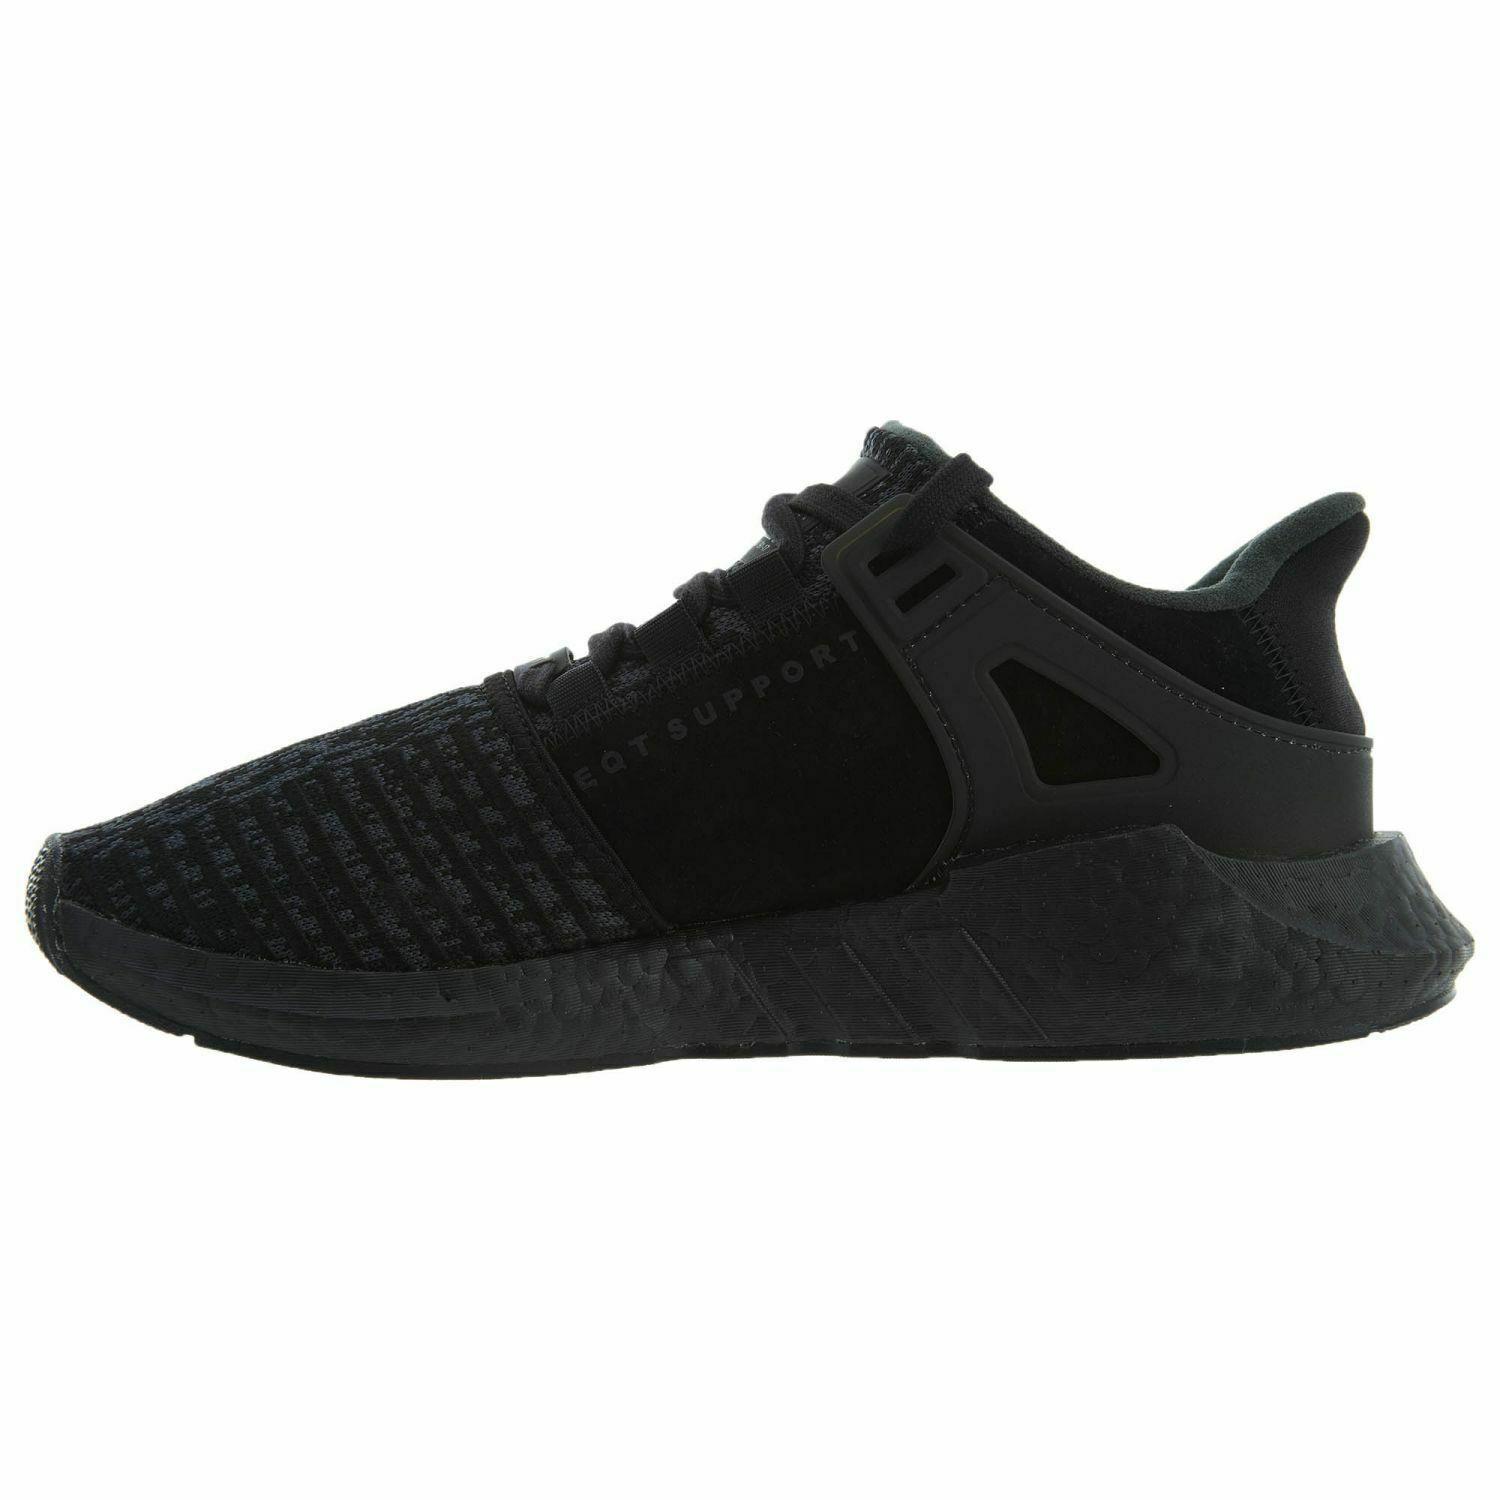 Adidas shoes EQT Support - Black/Black/White 2